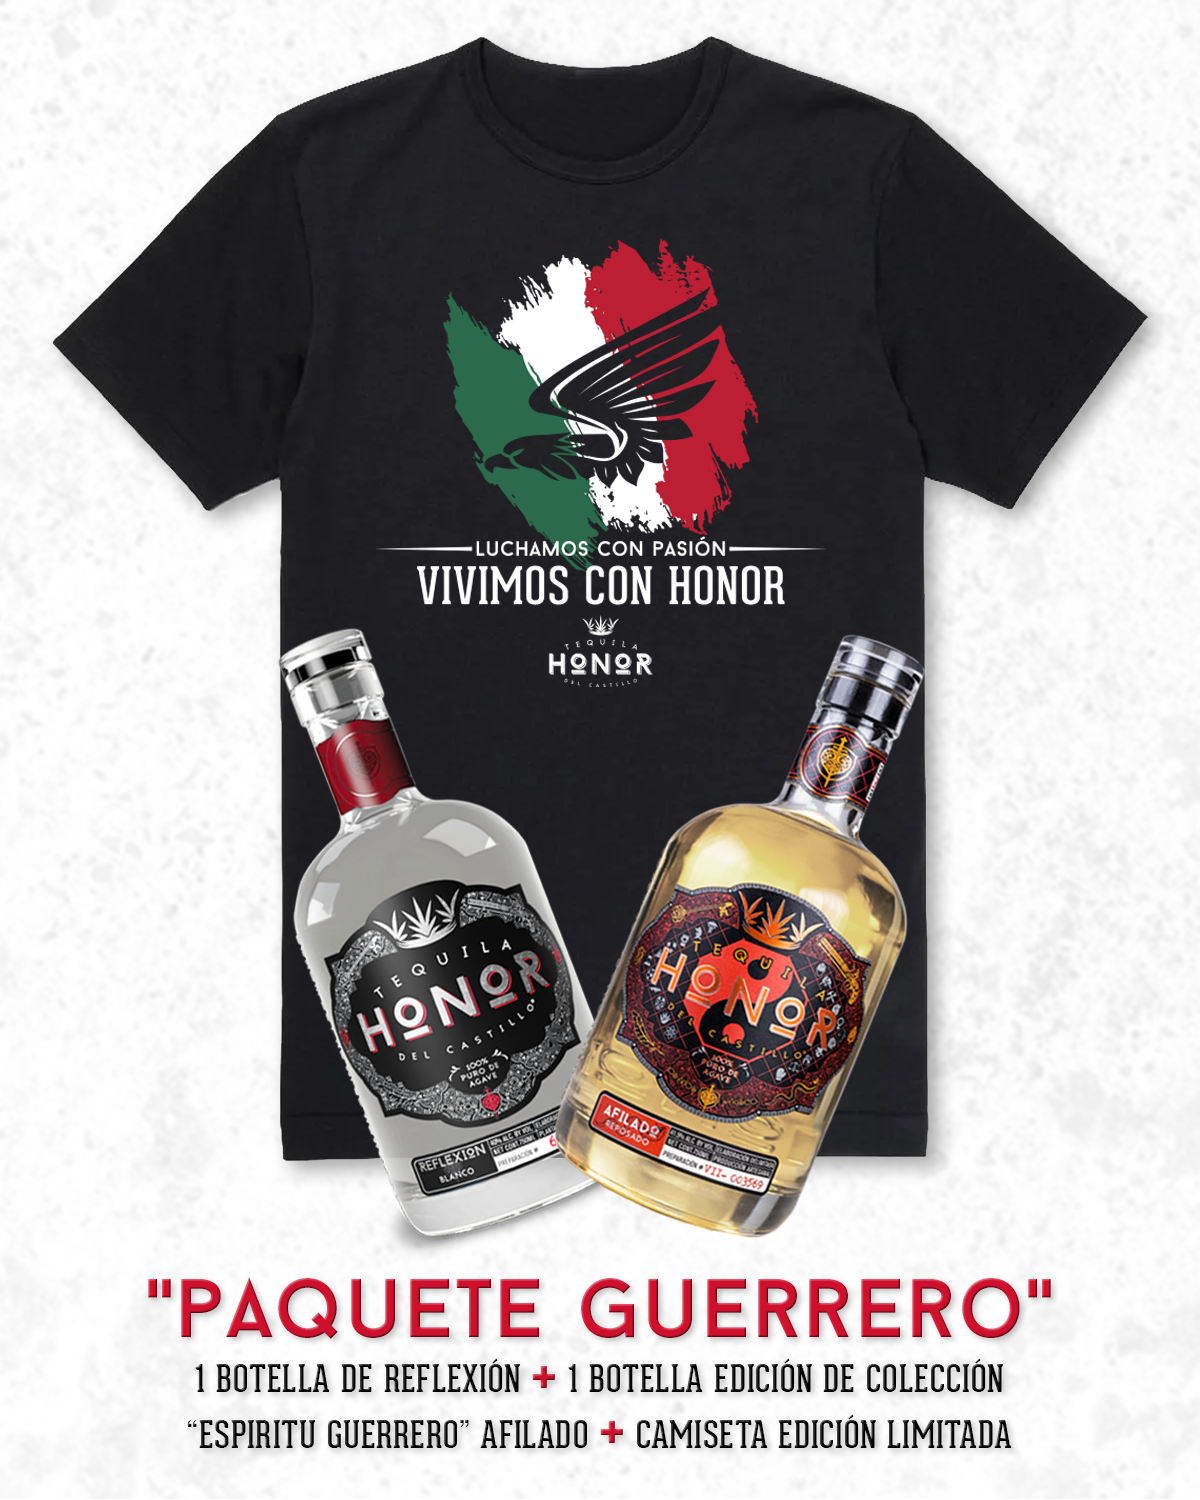 Paquete Guerrero - Mexico / Mexico Warrior's Pack